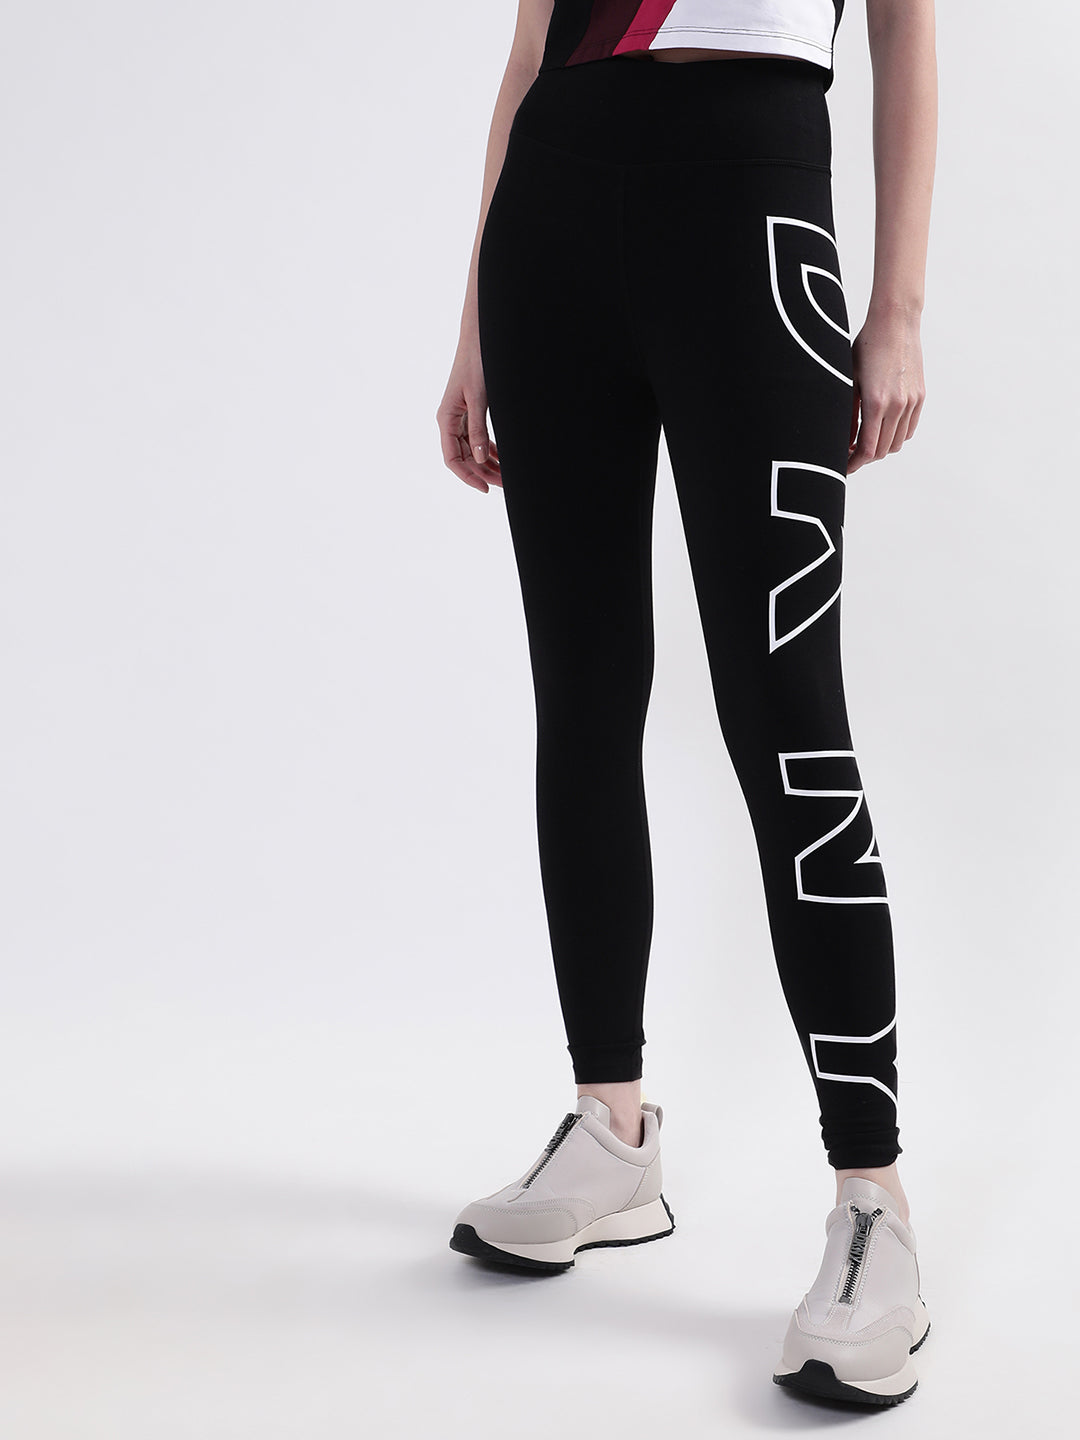 Buy DKNY Women's Sport Tummy Control Workout Yoga Leggings, Black/White,  Medium at Amazon.in